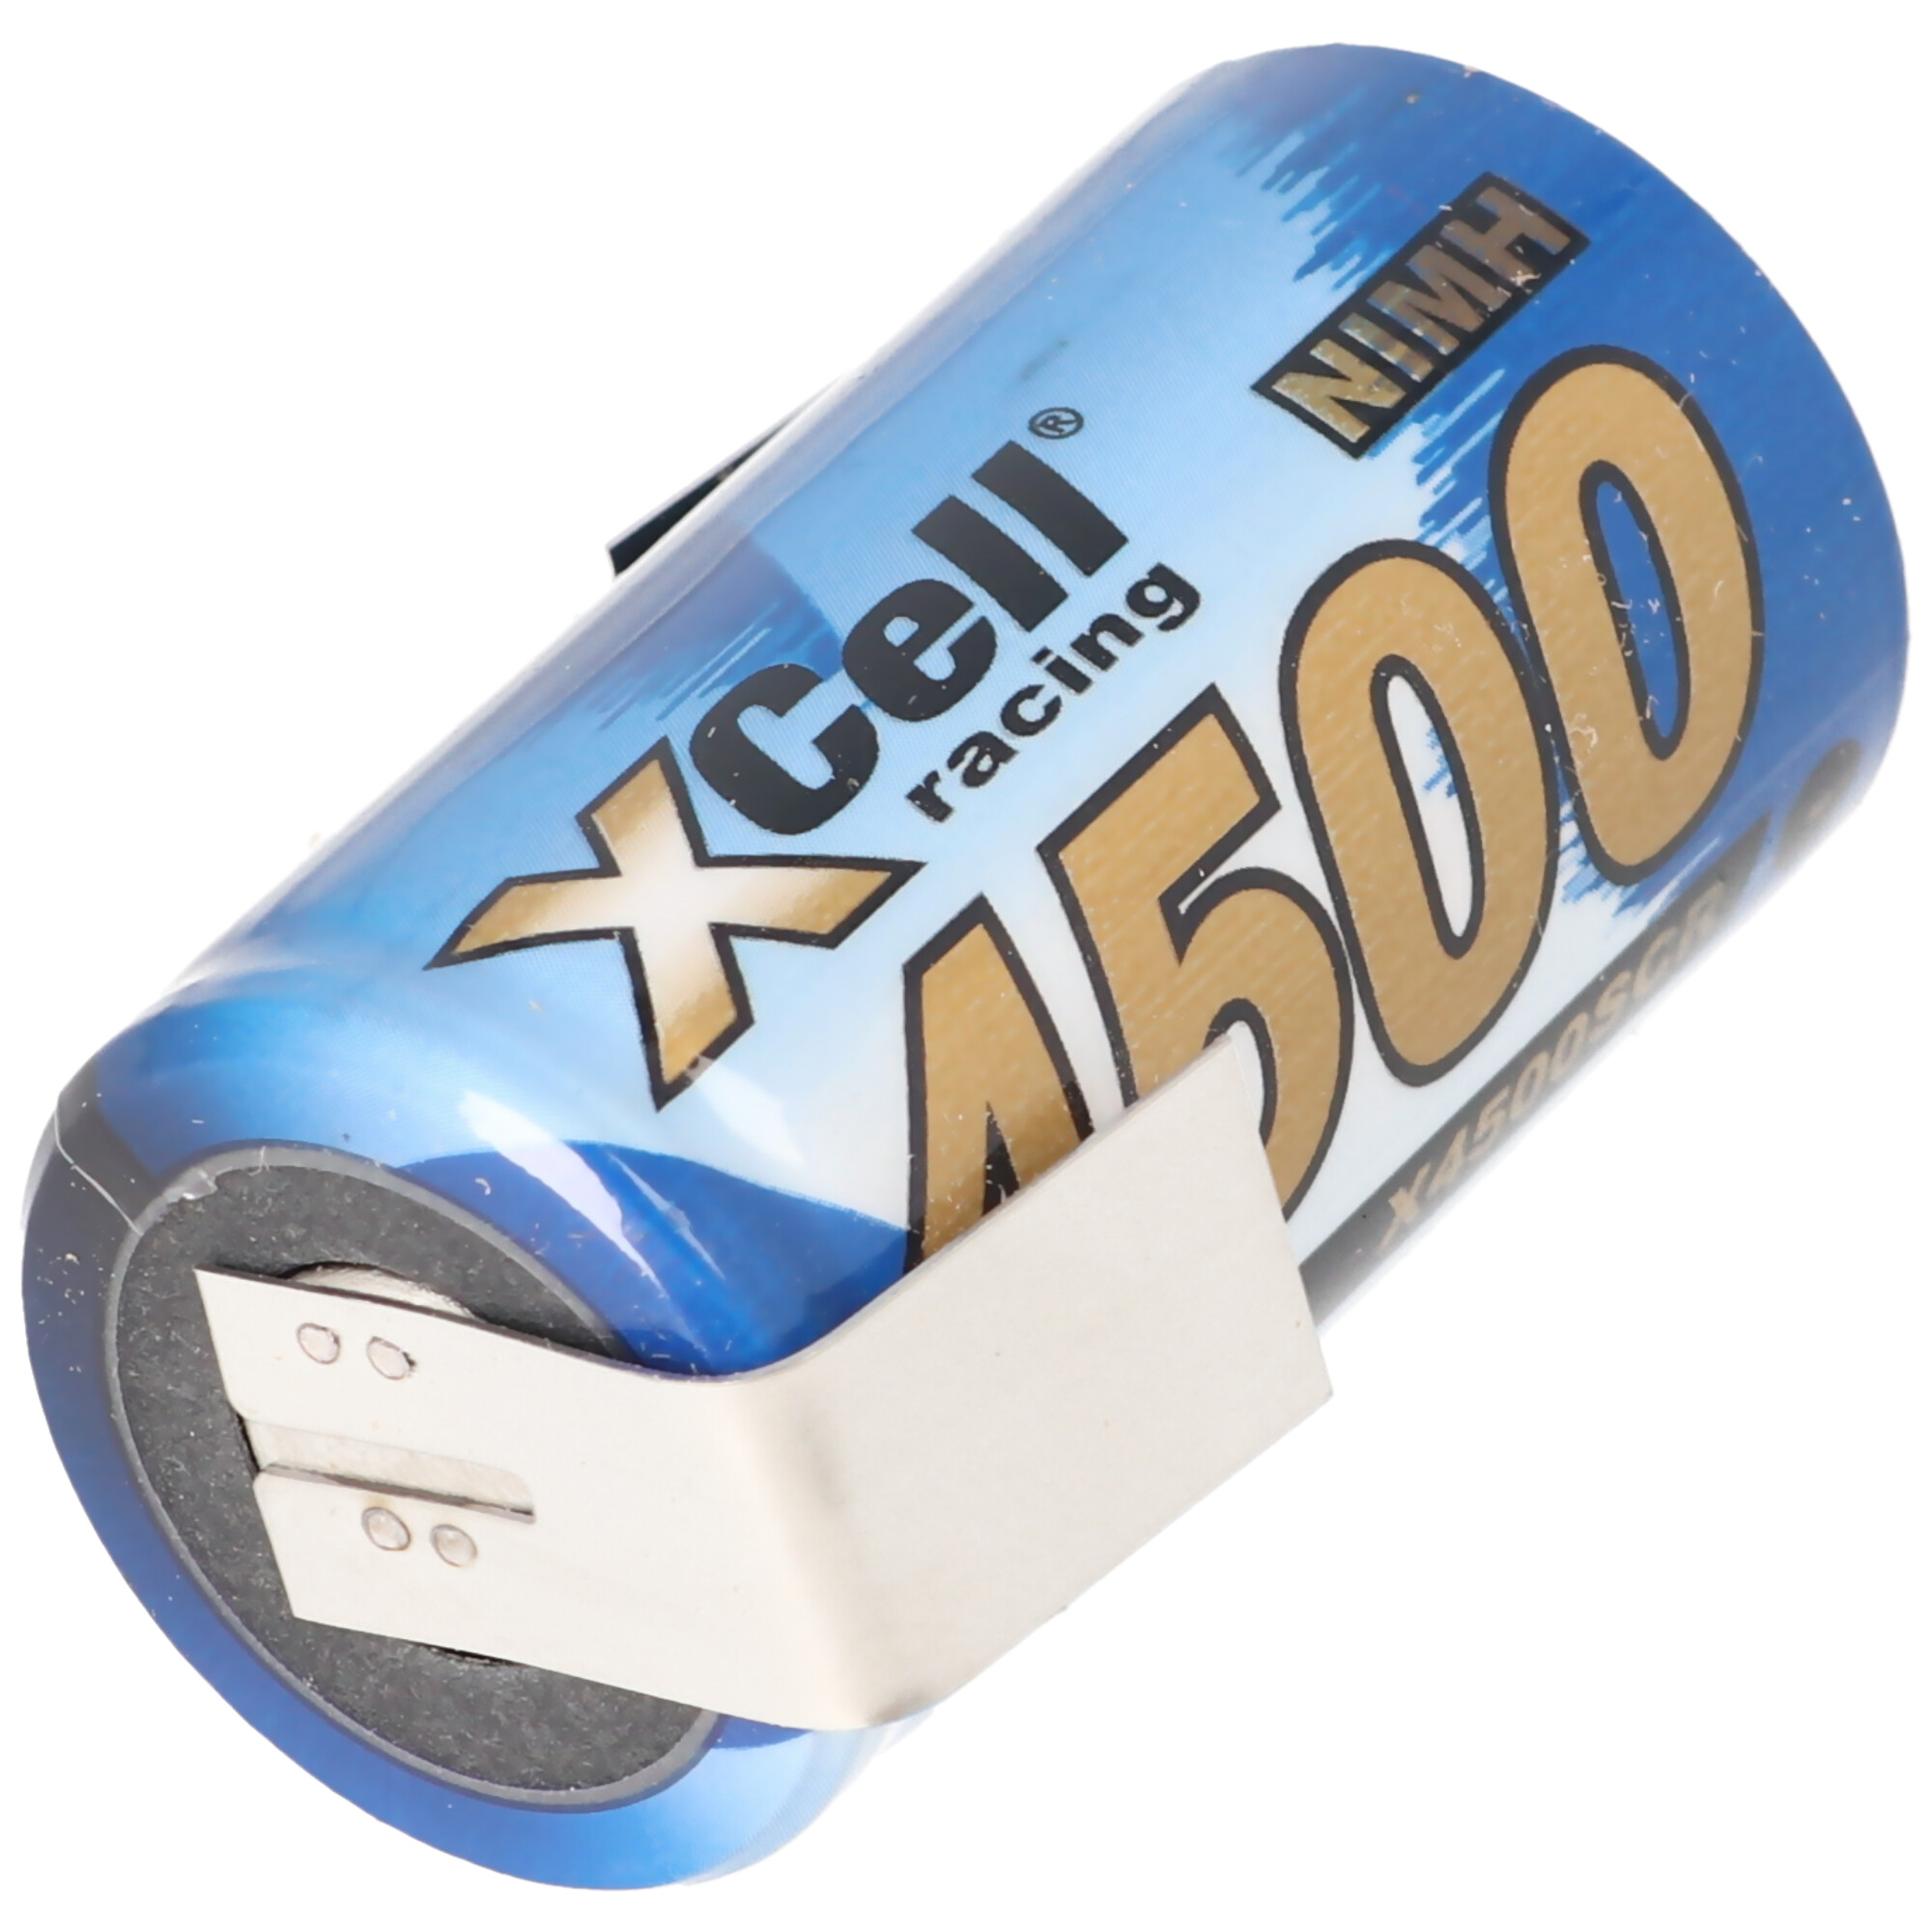 XCell 4500mAh Sub-C NiMH Akku mit Lötfahne Z-Form